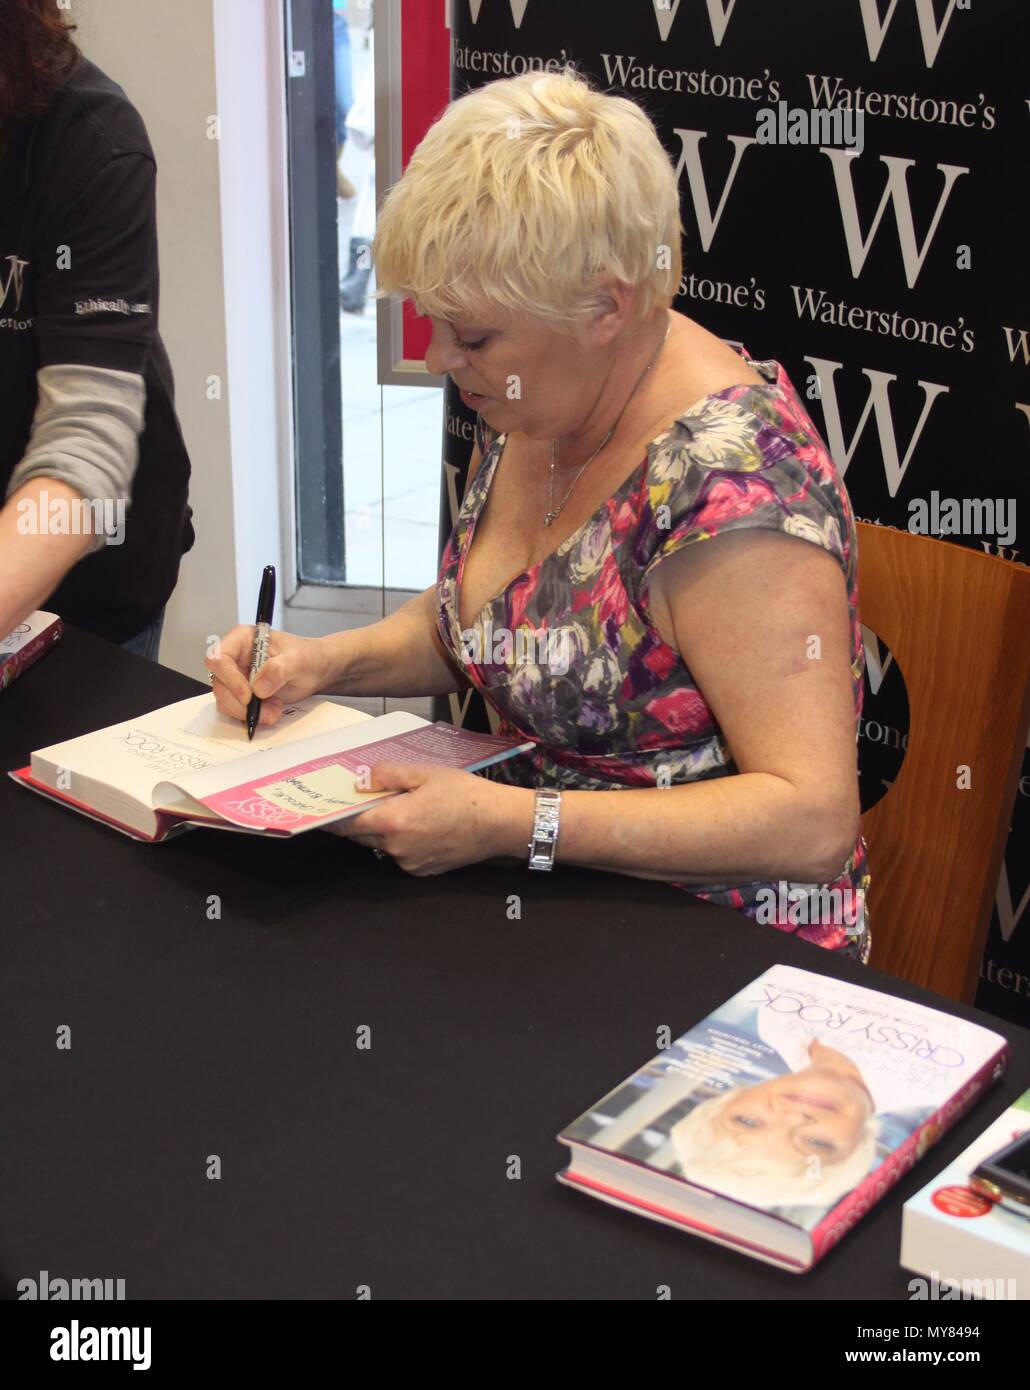 Liverpool,uk, Chrissy Rock signs copies of her autiobiography, credit Ian Fairbrother/Alamy stock photos Stock Photo